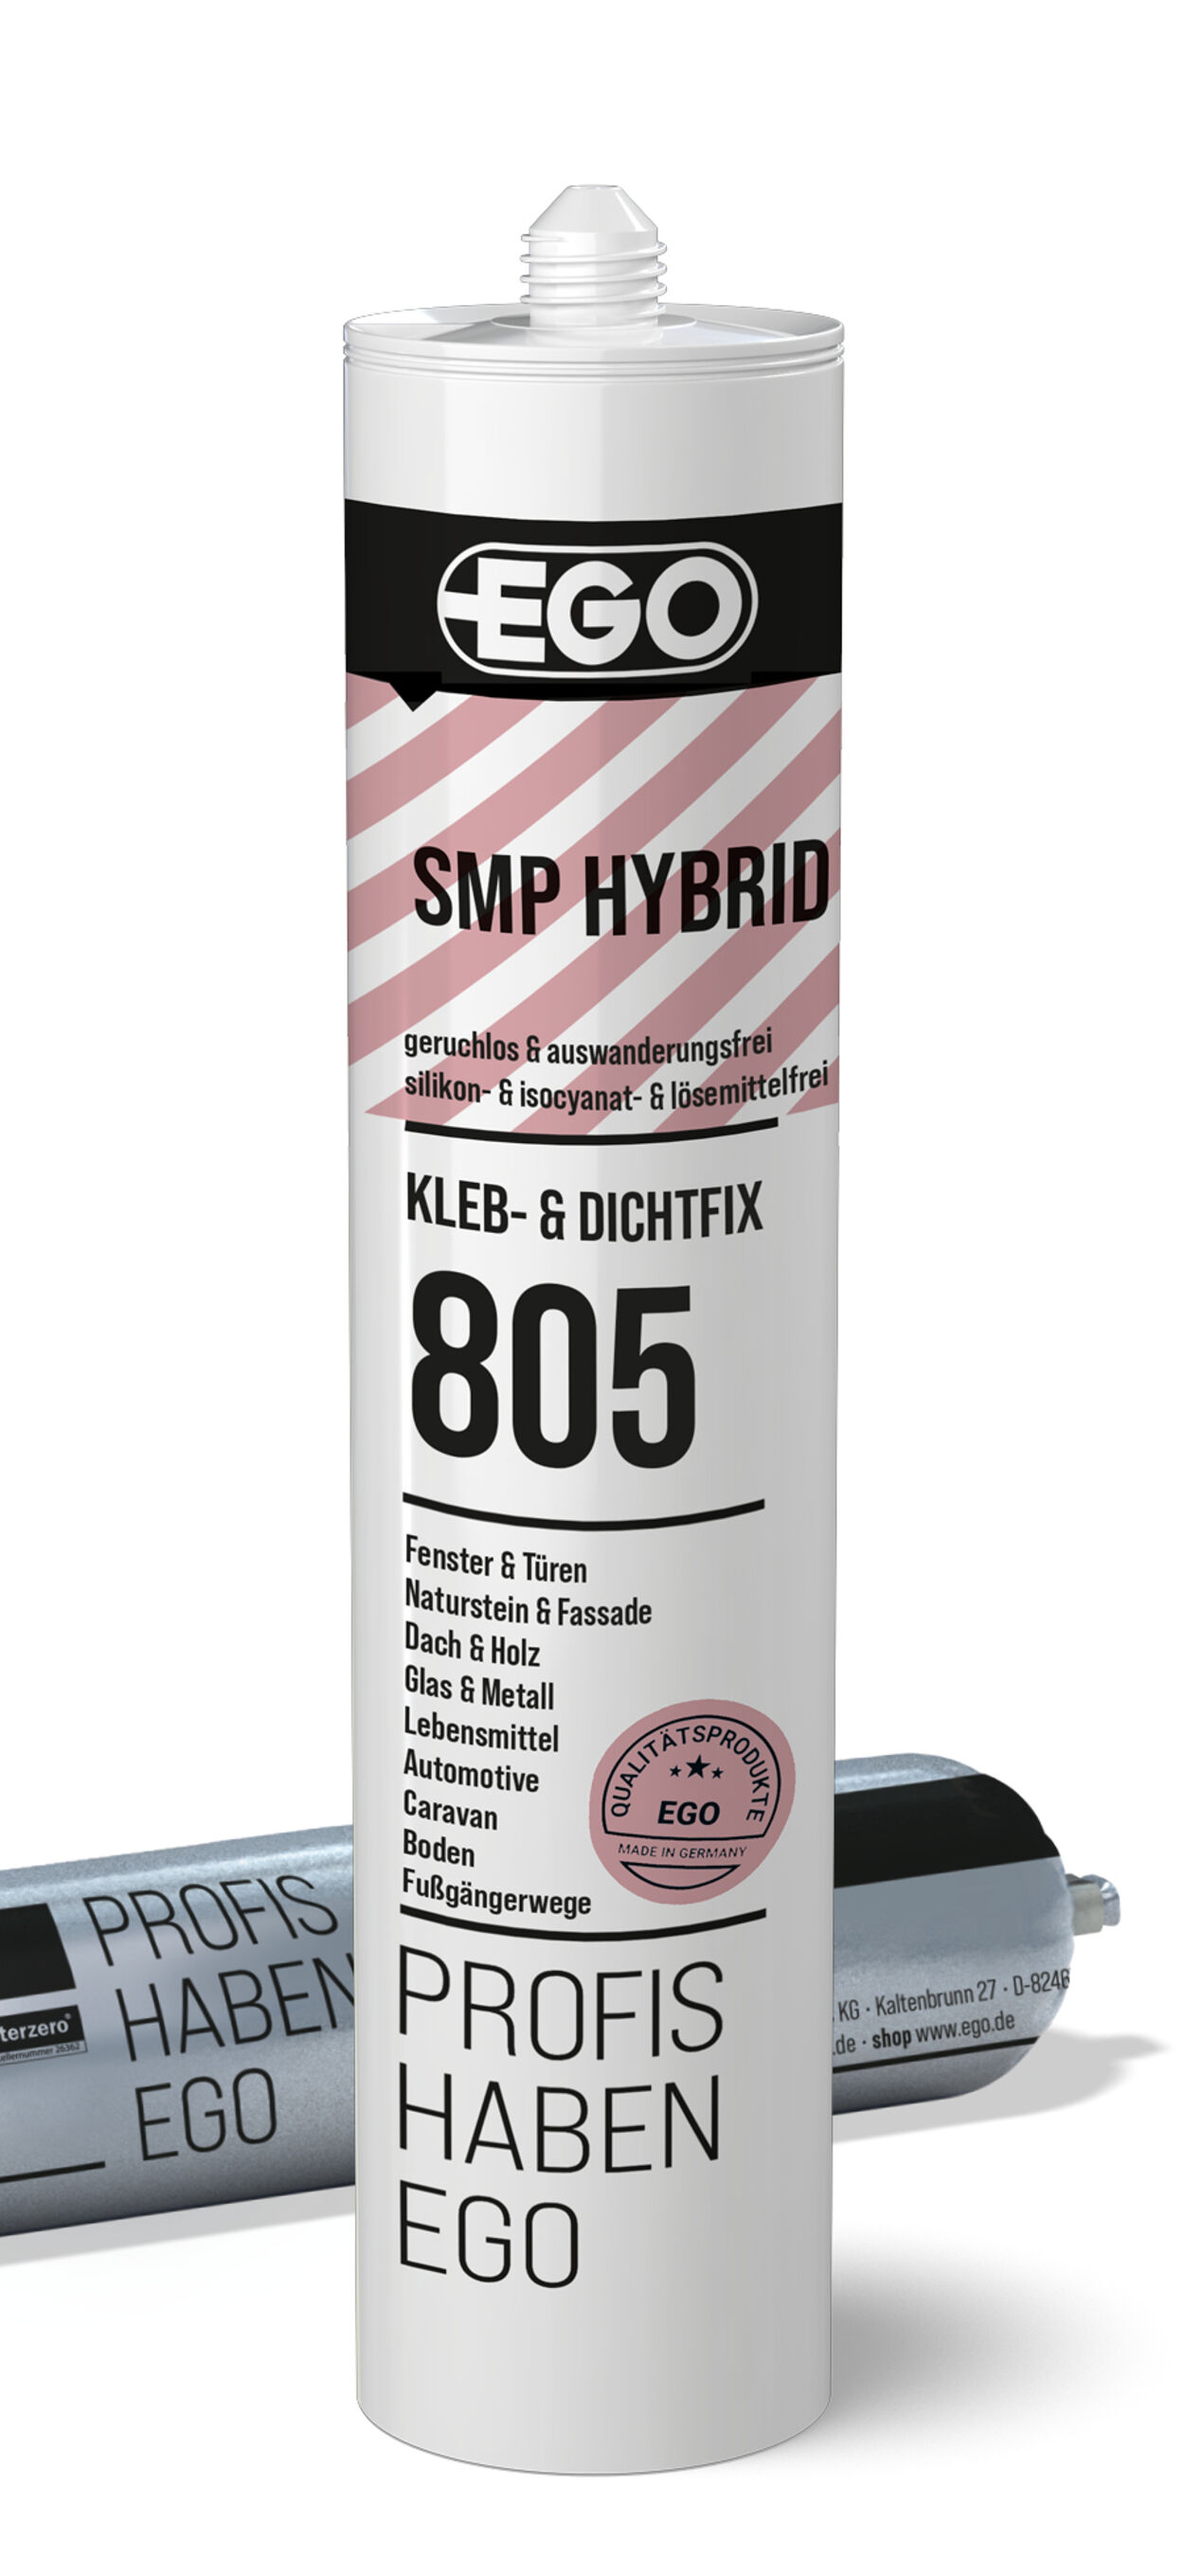 SMP hybrid sealant   for bonding &amp; sealing applications